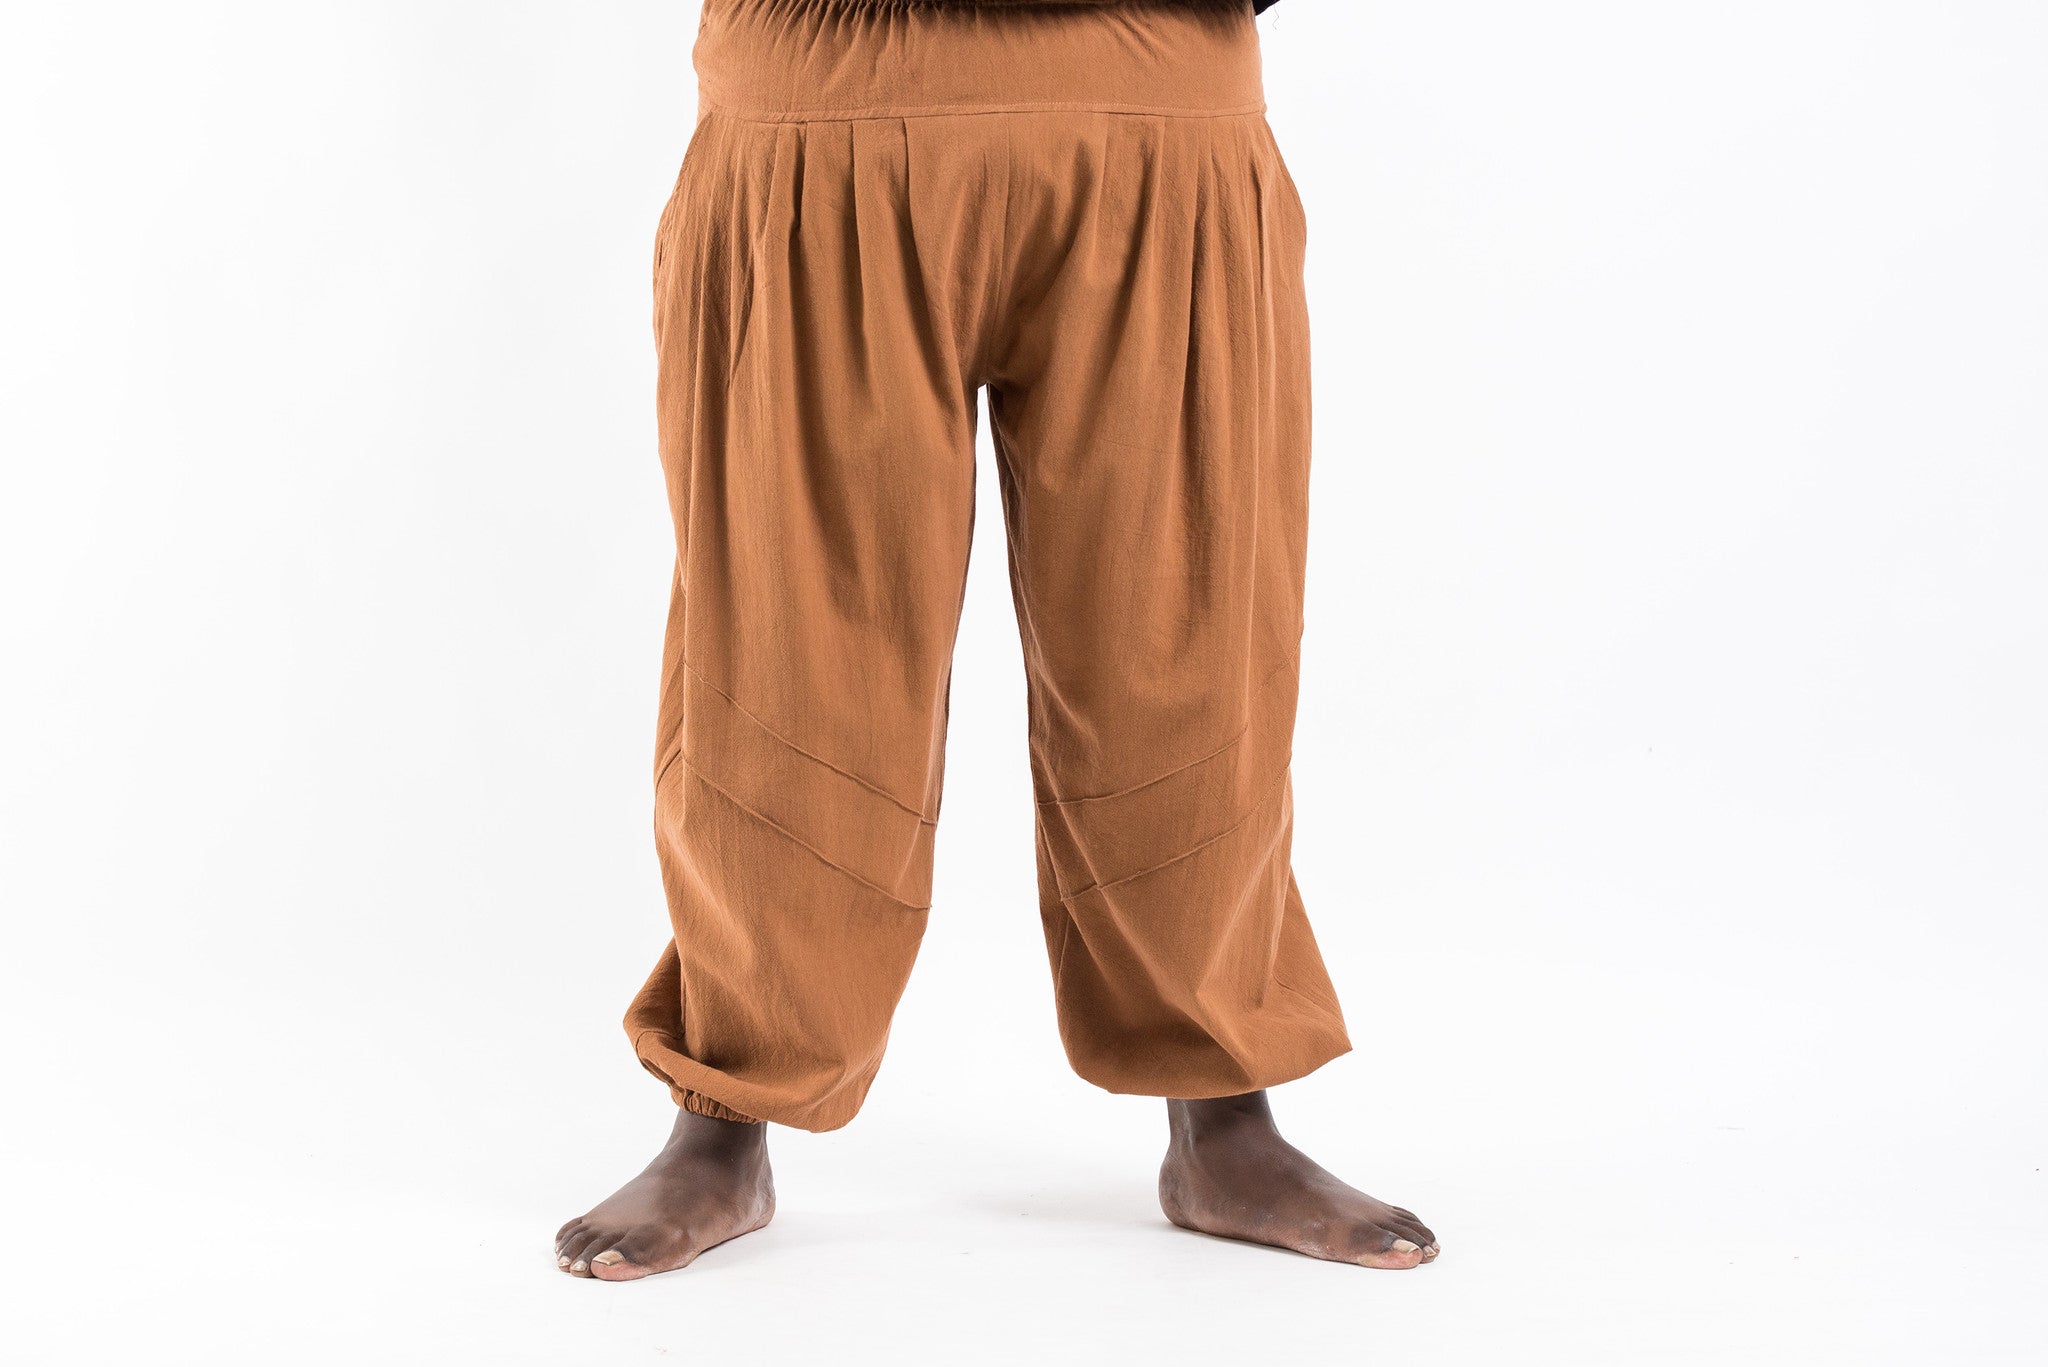 Buy Men's Harem Pant Pack of 2, Grey & Black, Fits Waist Size 28 to 36  Online on Brown Living